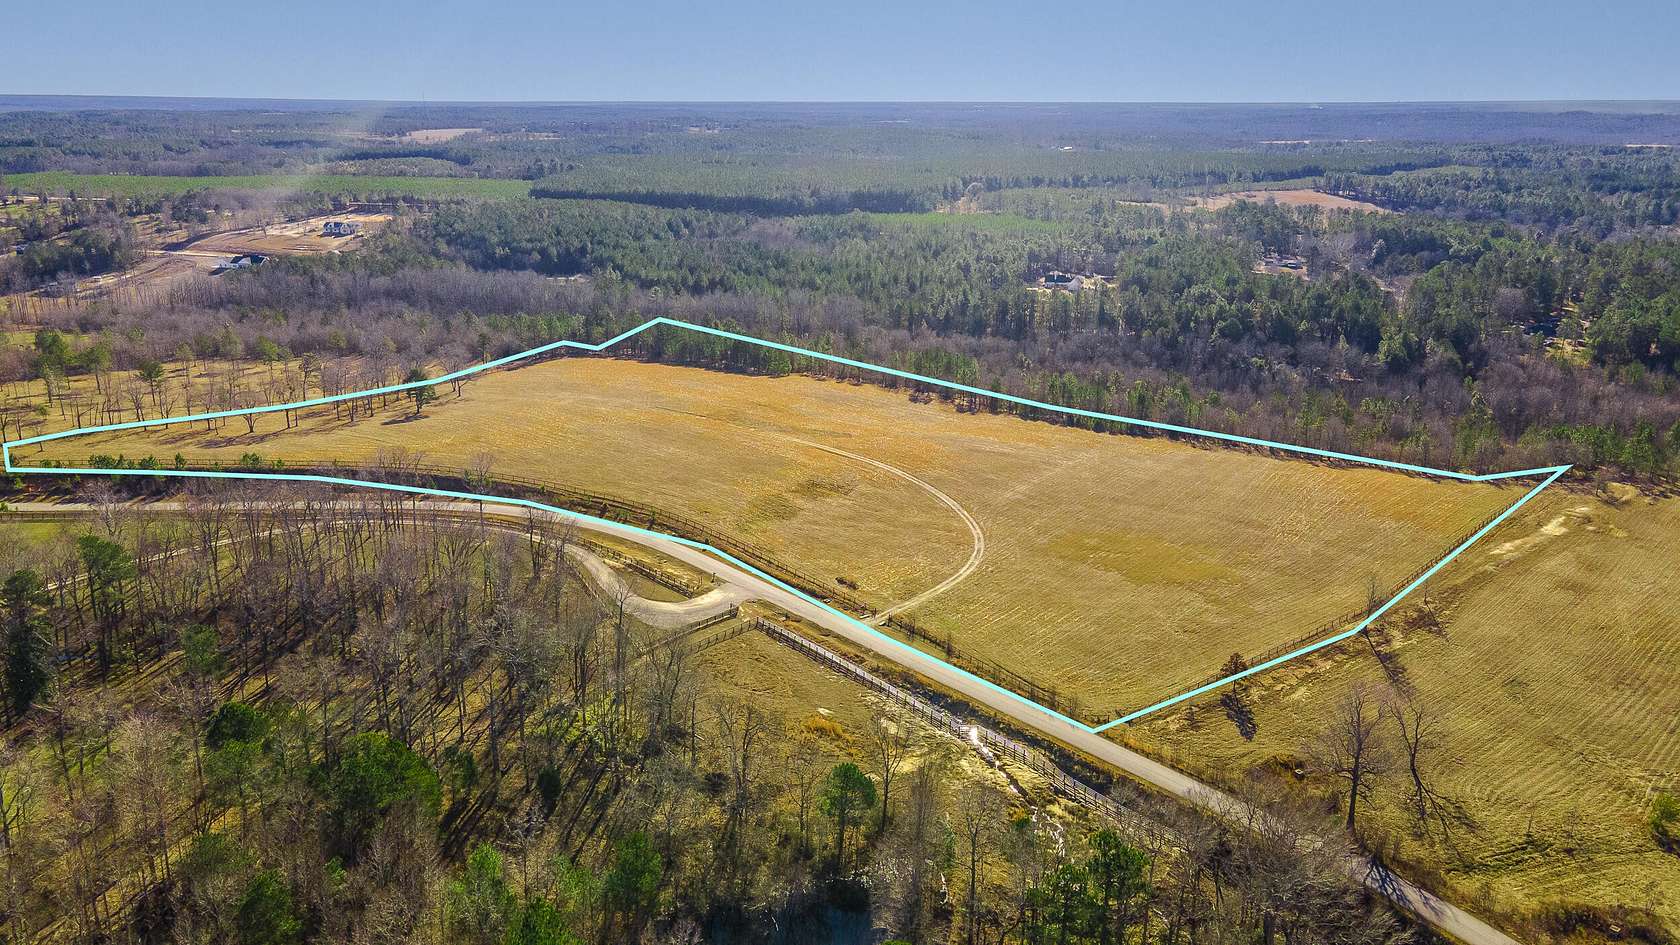 22.4 Acres of Agricultural Land for Sale in Aiken, South Carolina